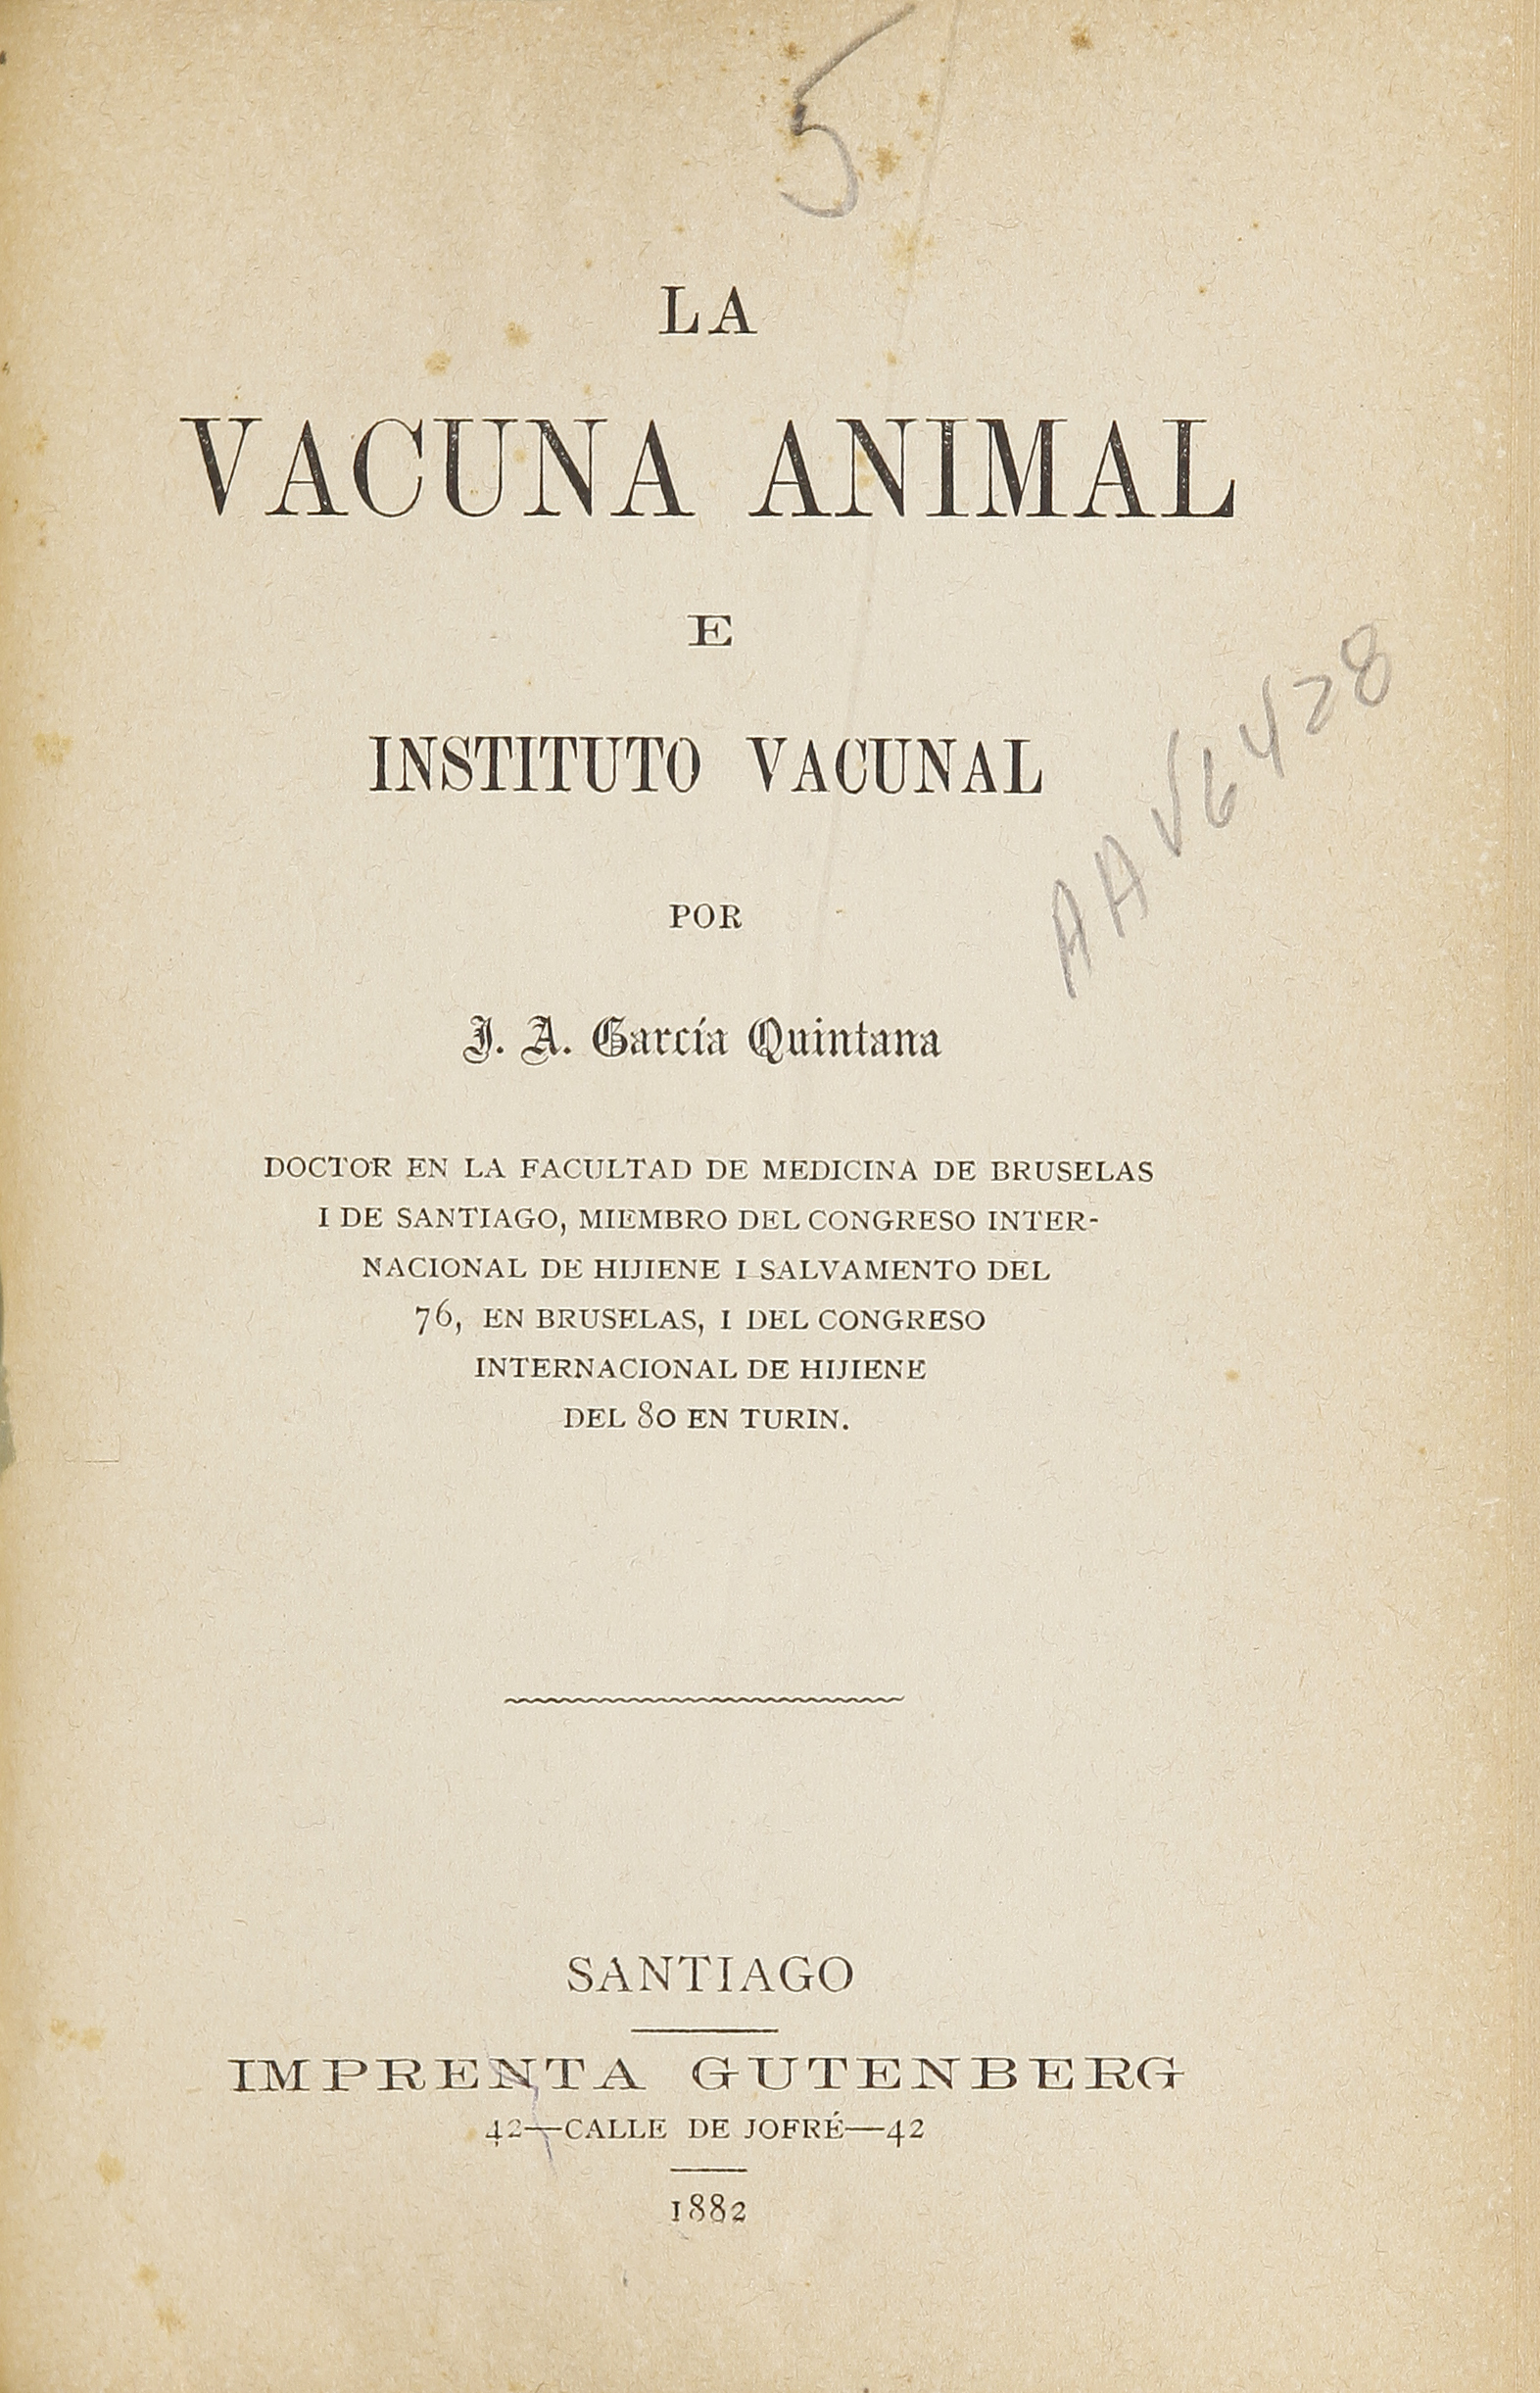 La vacuna animal e instituto vacunal